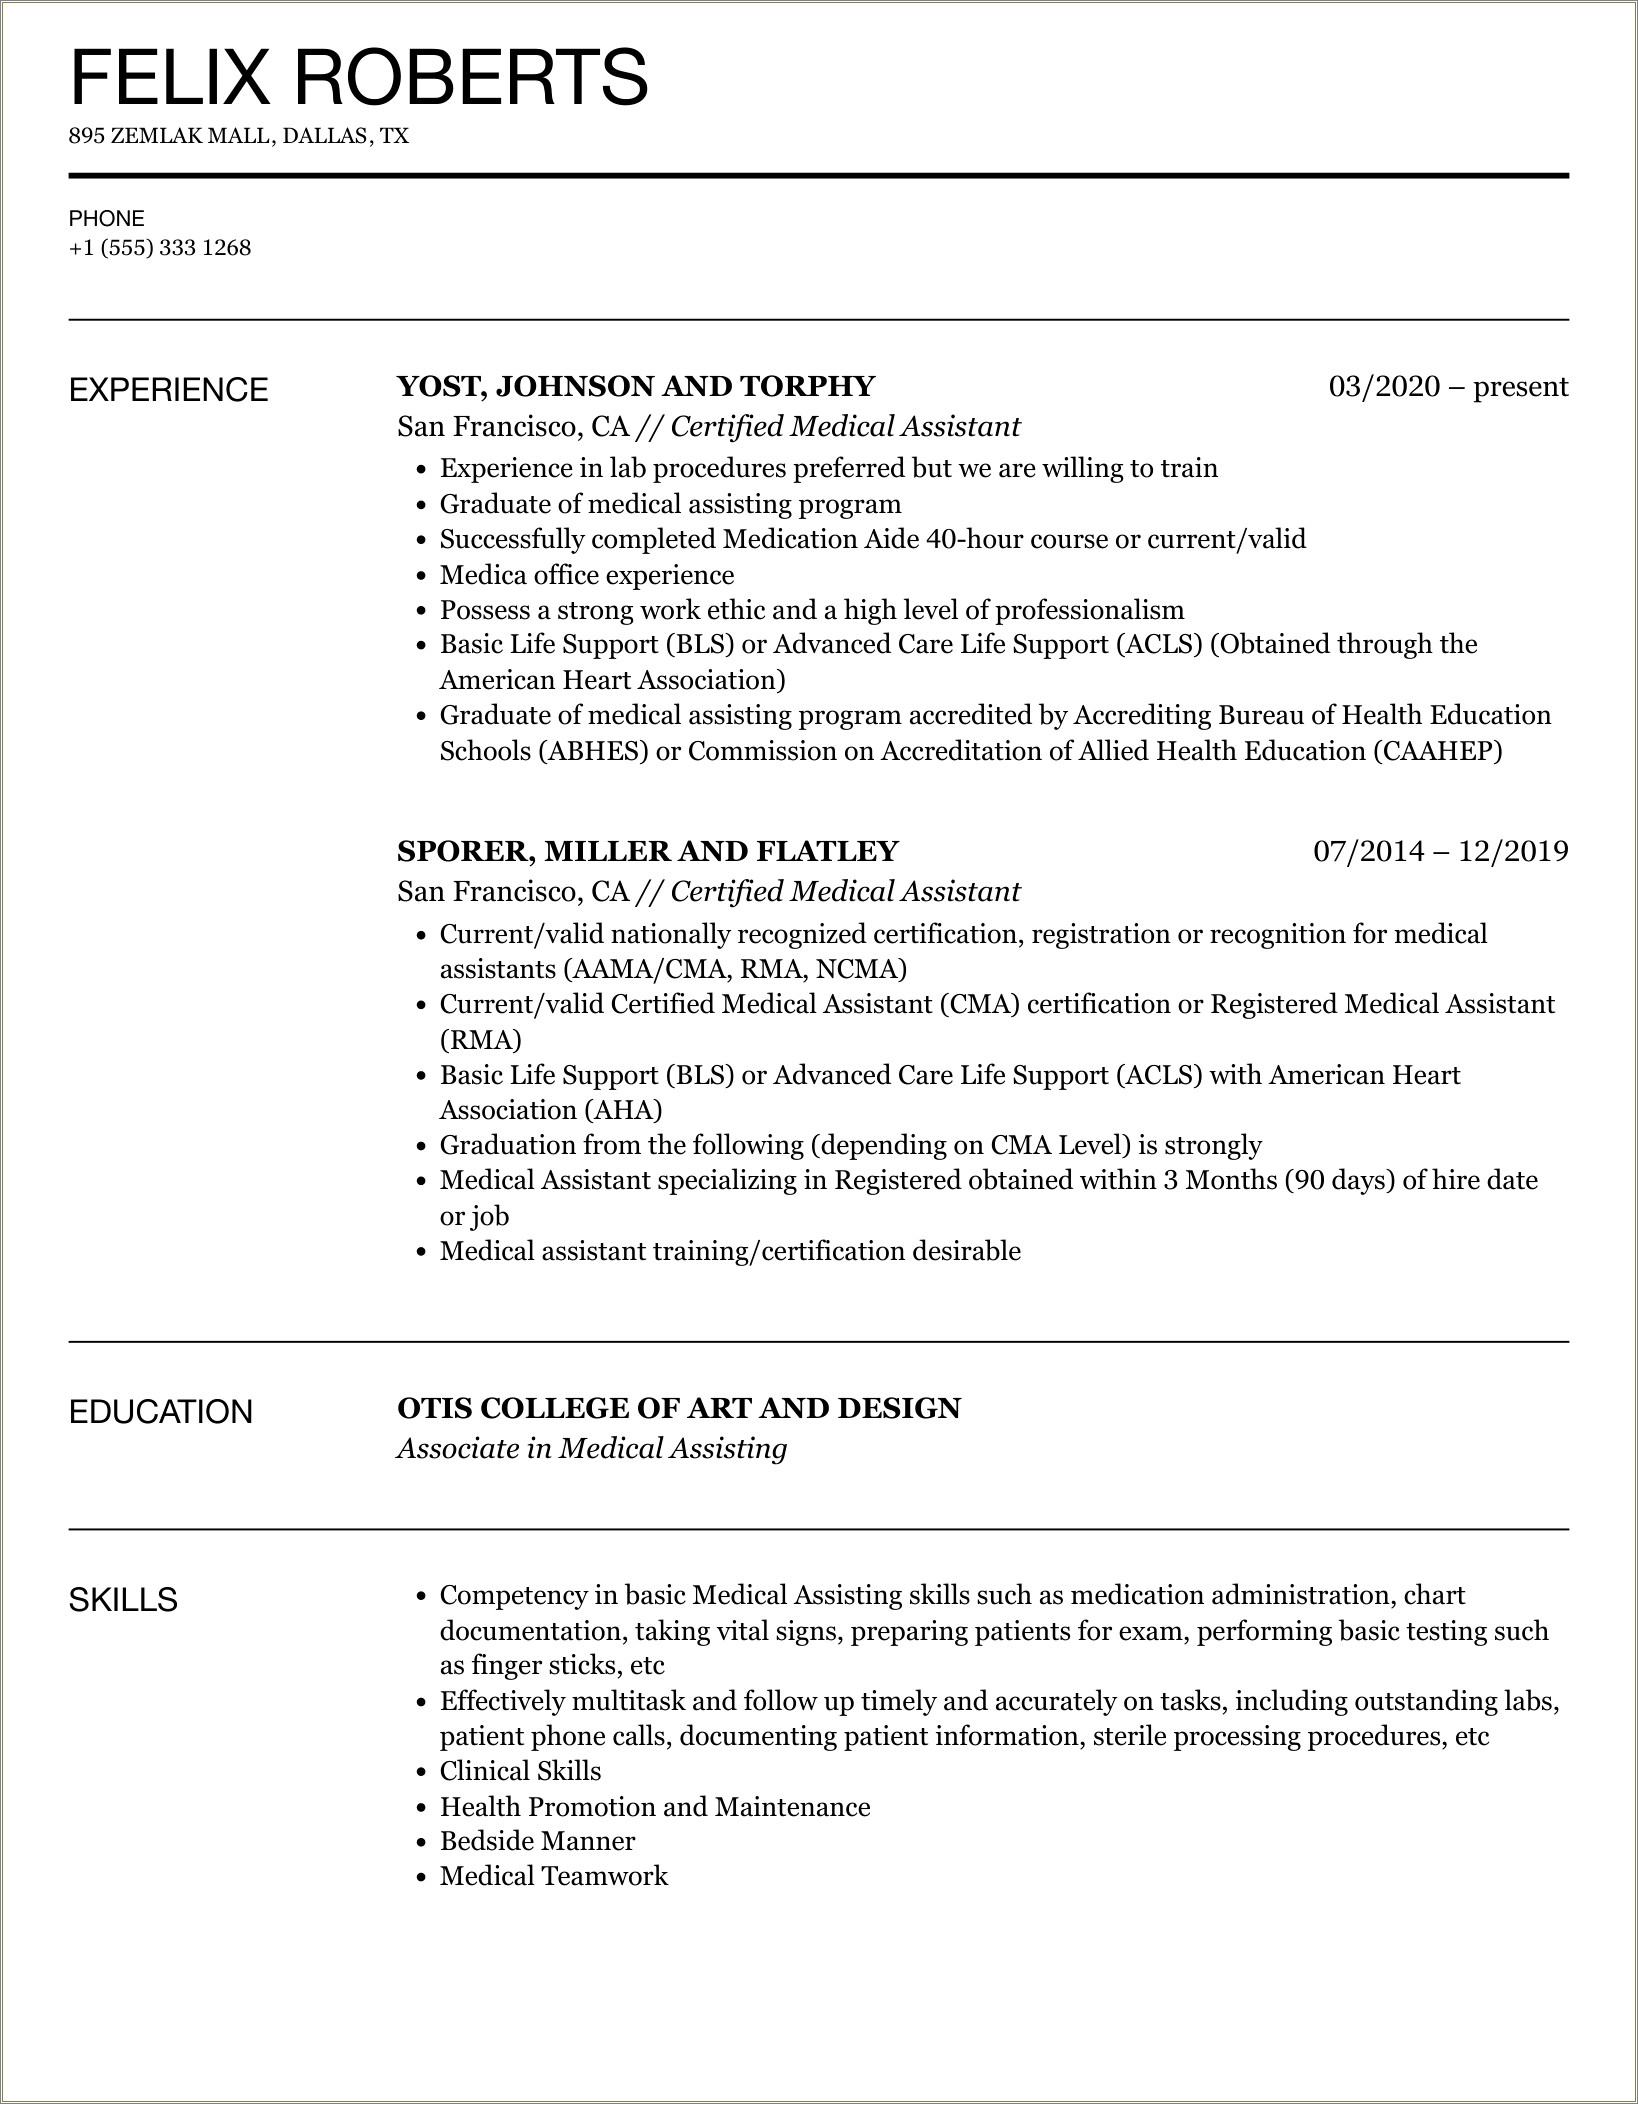 Medical Assistant School Description For Resume